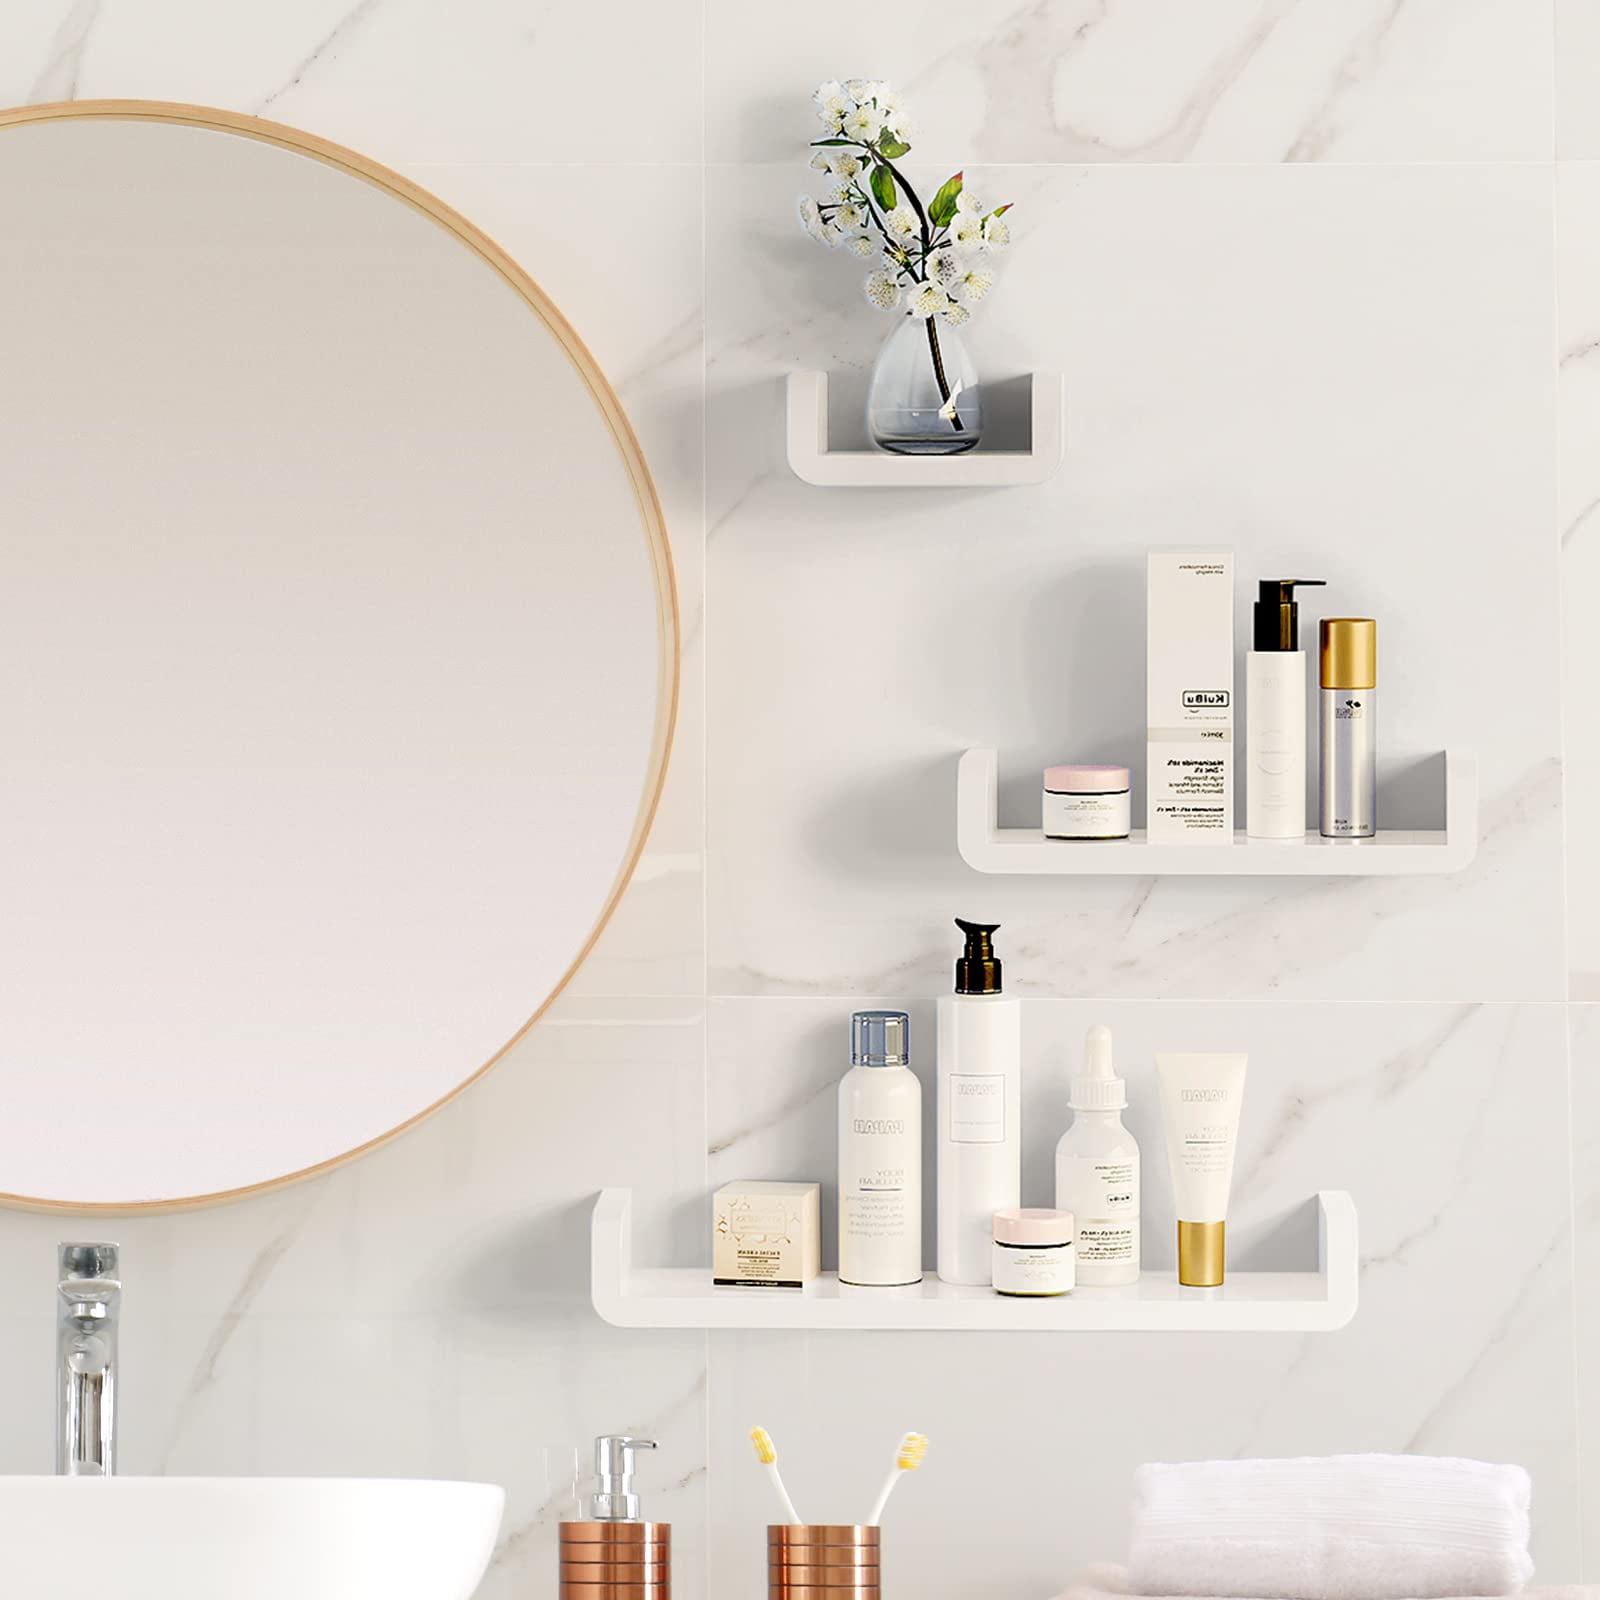 LAIGOO Floating Shelf Adhesive Wall Mounted Non-Drilling, U Bathroom  Organizer Display Picture Ledge Shelf for Home Decor/Kitchen/Bathroom